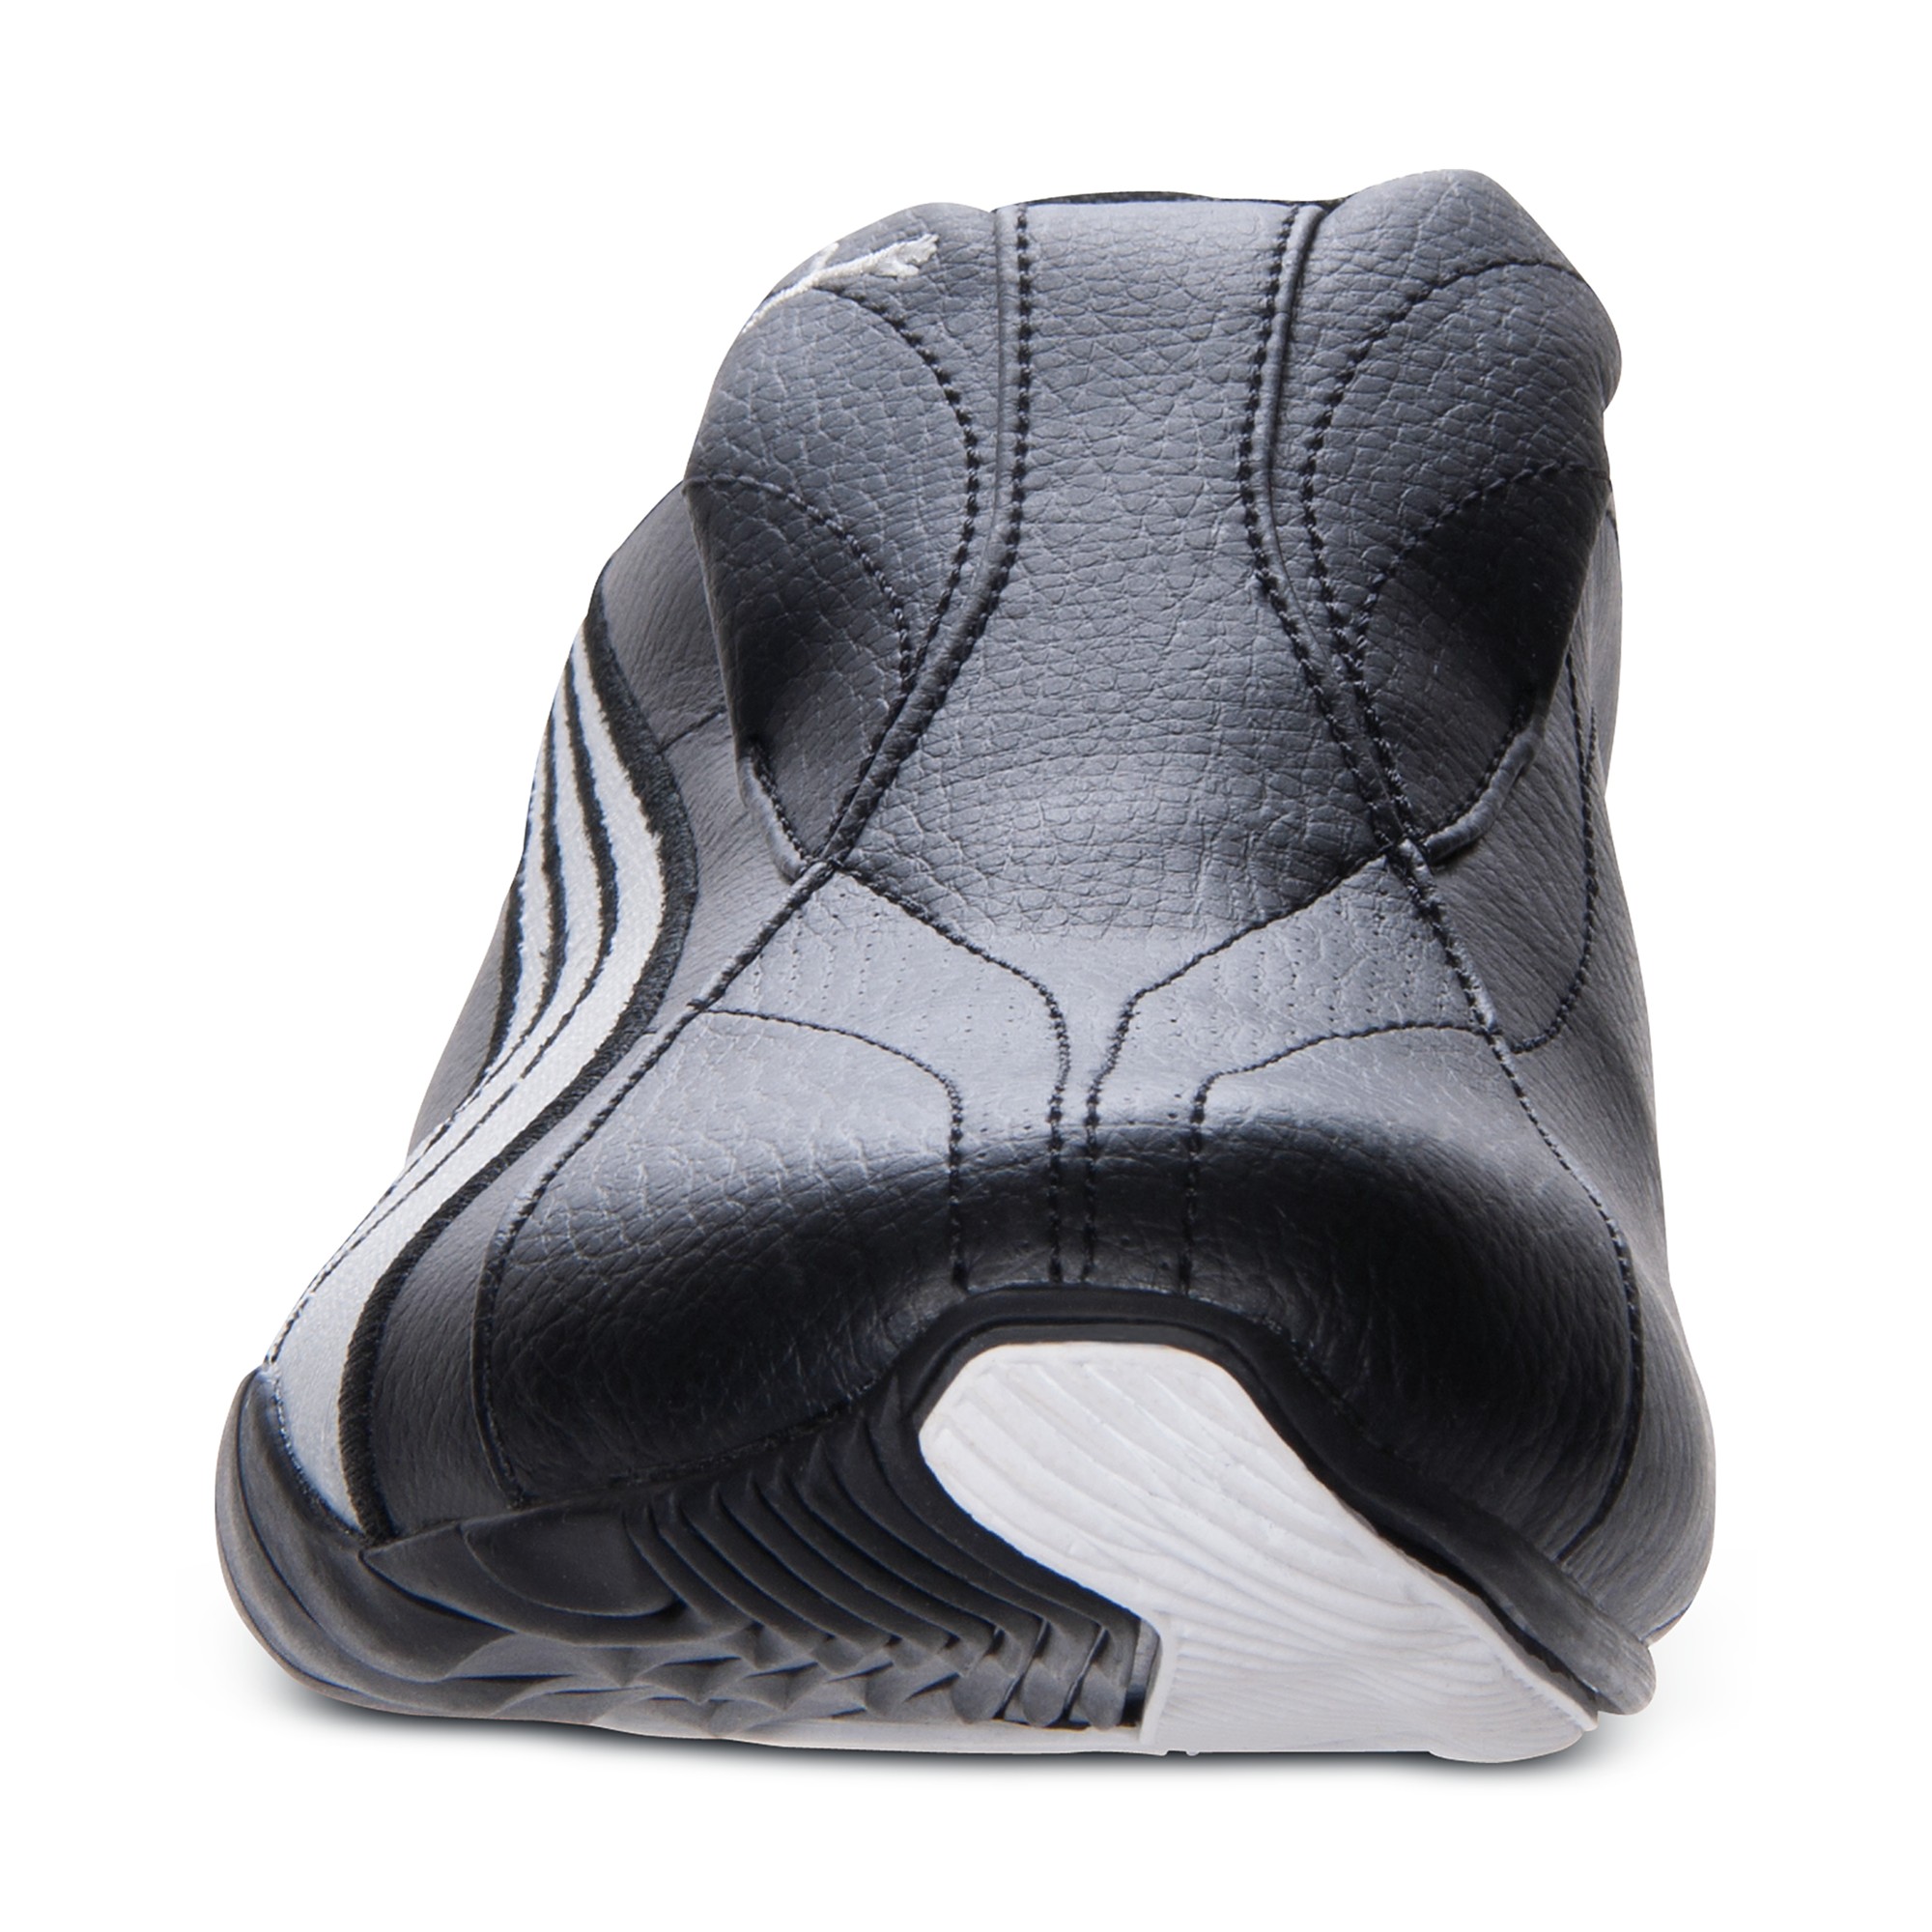 PUMA Tergament Sport Sneakers in Black/Grey/Violet (Black) for Men | Lyst